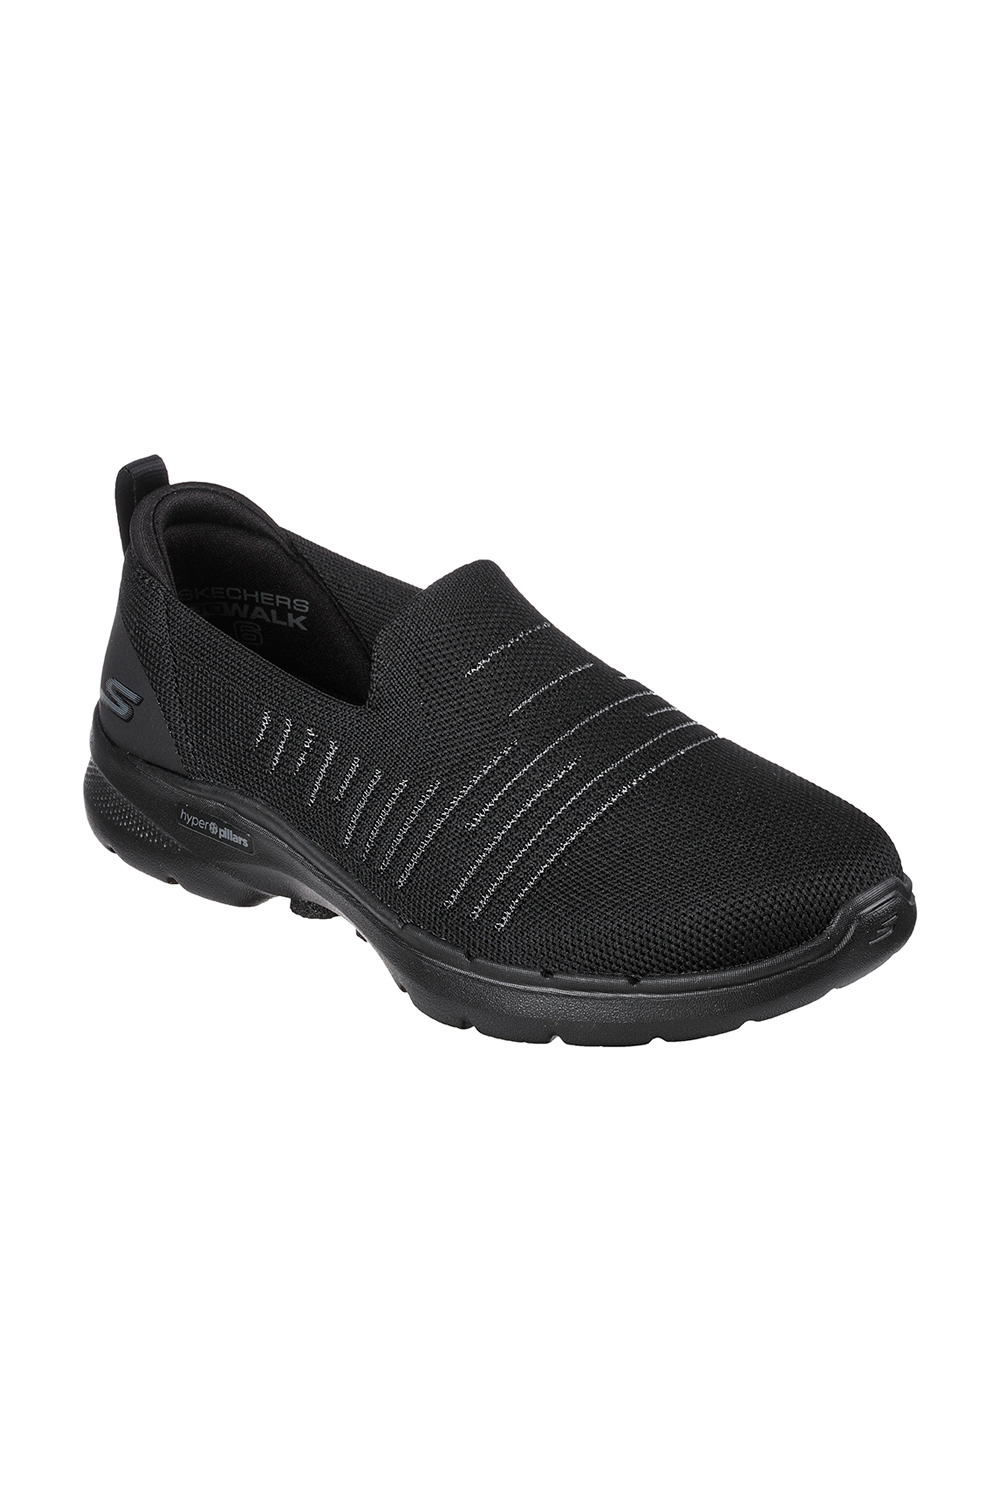 Skechers -124540-Bbk-Go Walk 6-Women-Running-Shoe | Odel.lk